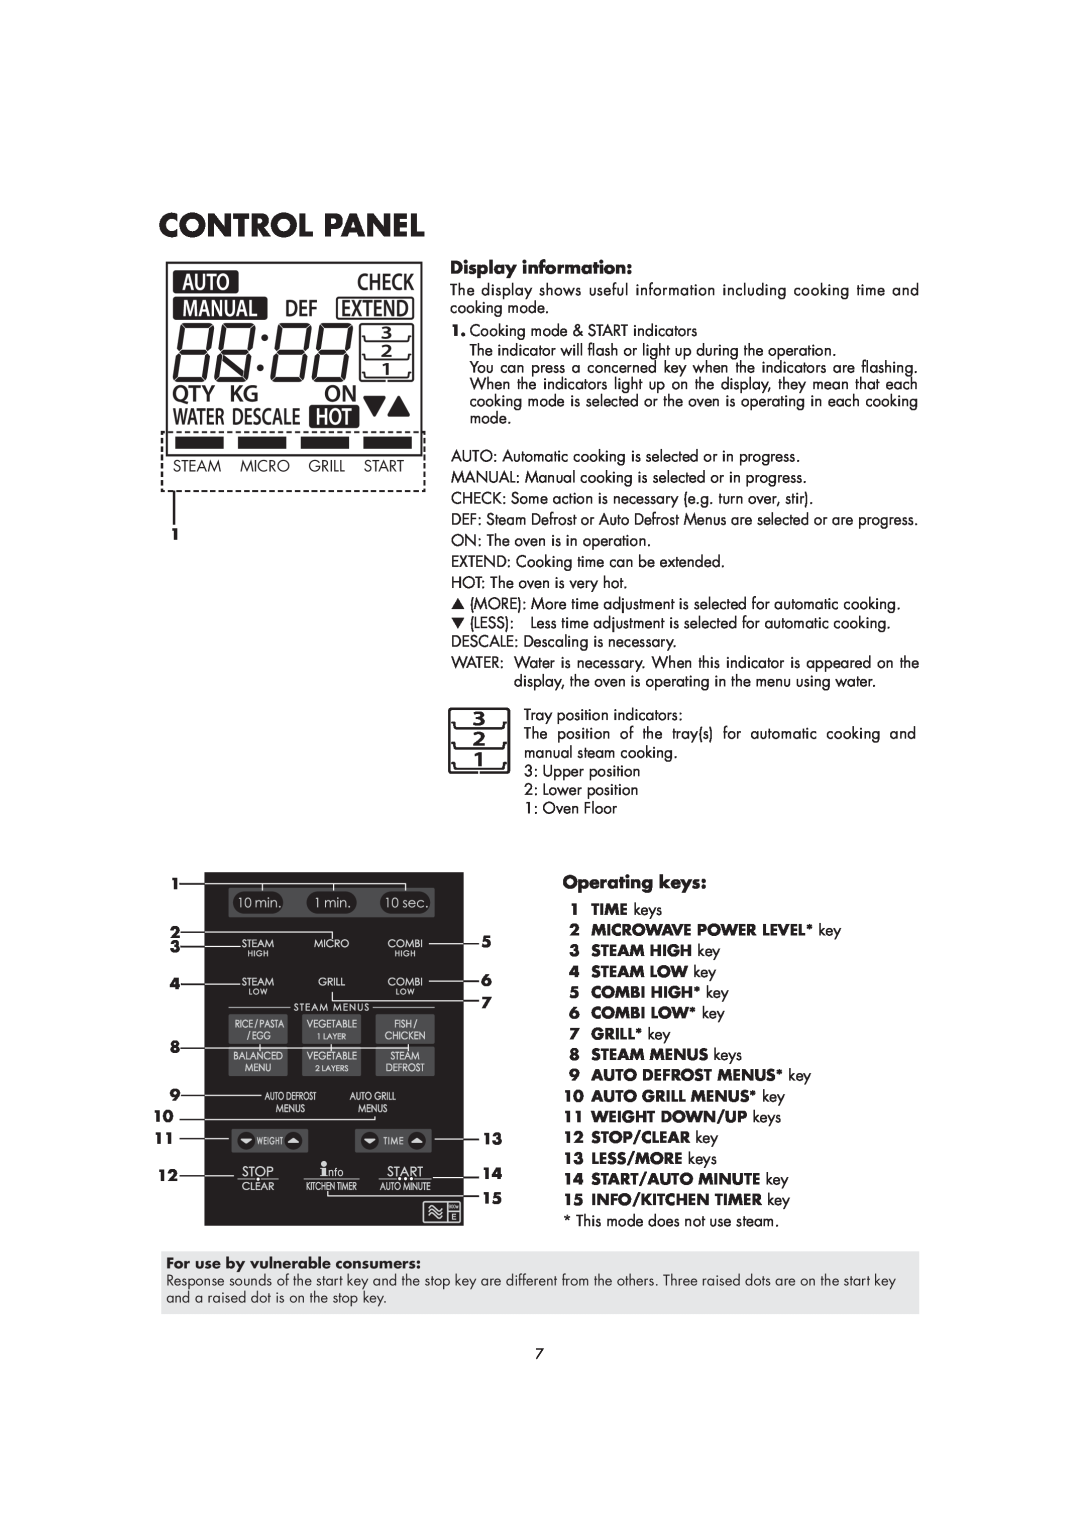 Sharp AX-1110(SL)M manual Control Panel, Display information, Operating keys, START/AUTO MINUTE key 